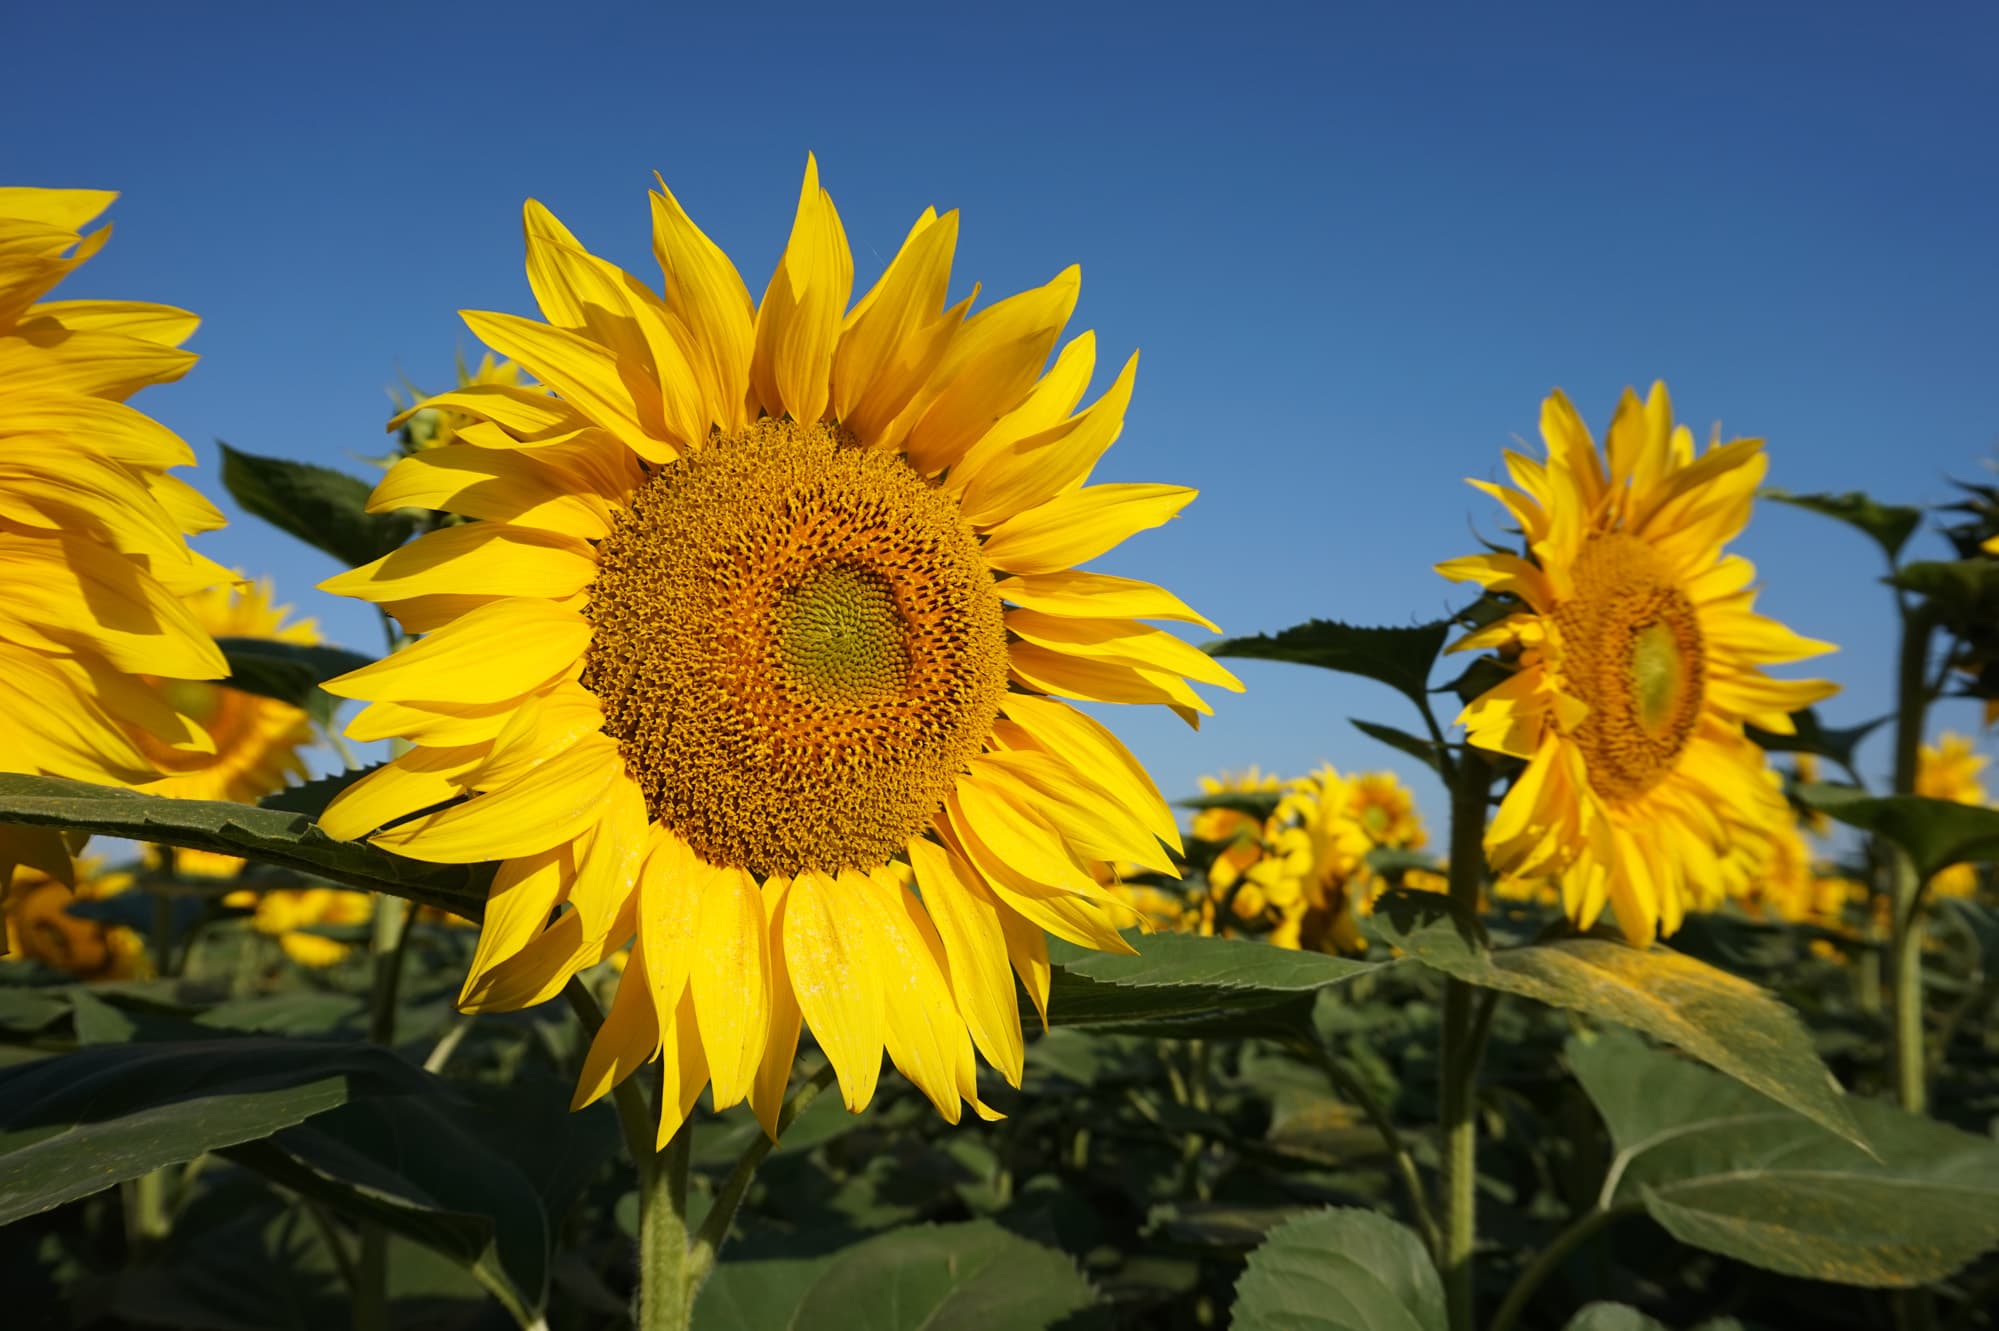 Crop Update - Organic Sunflower Season 2019/2020